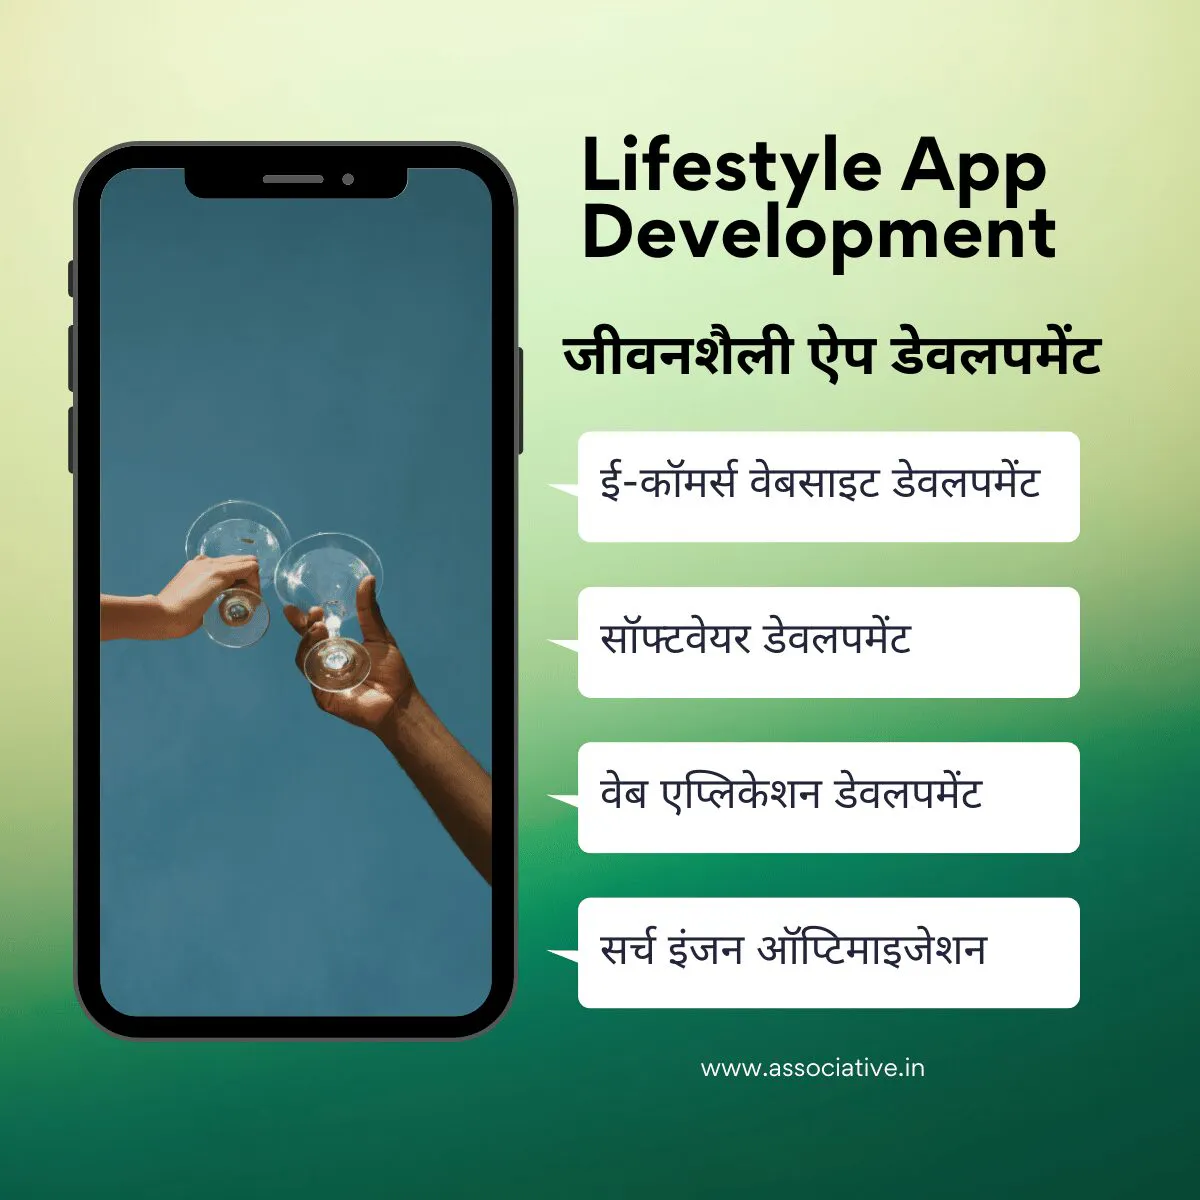 Lifestyle App Development